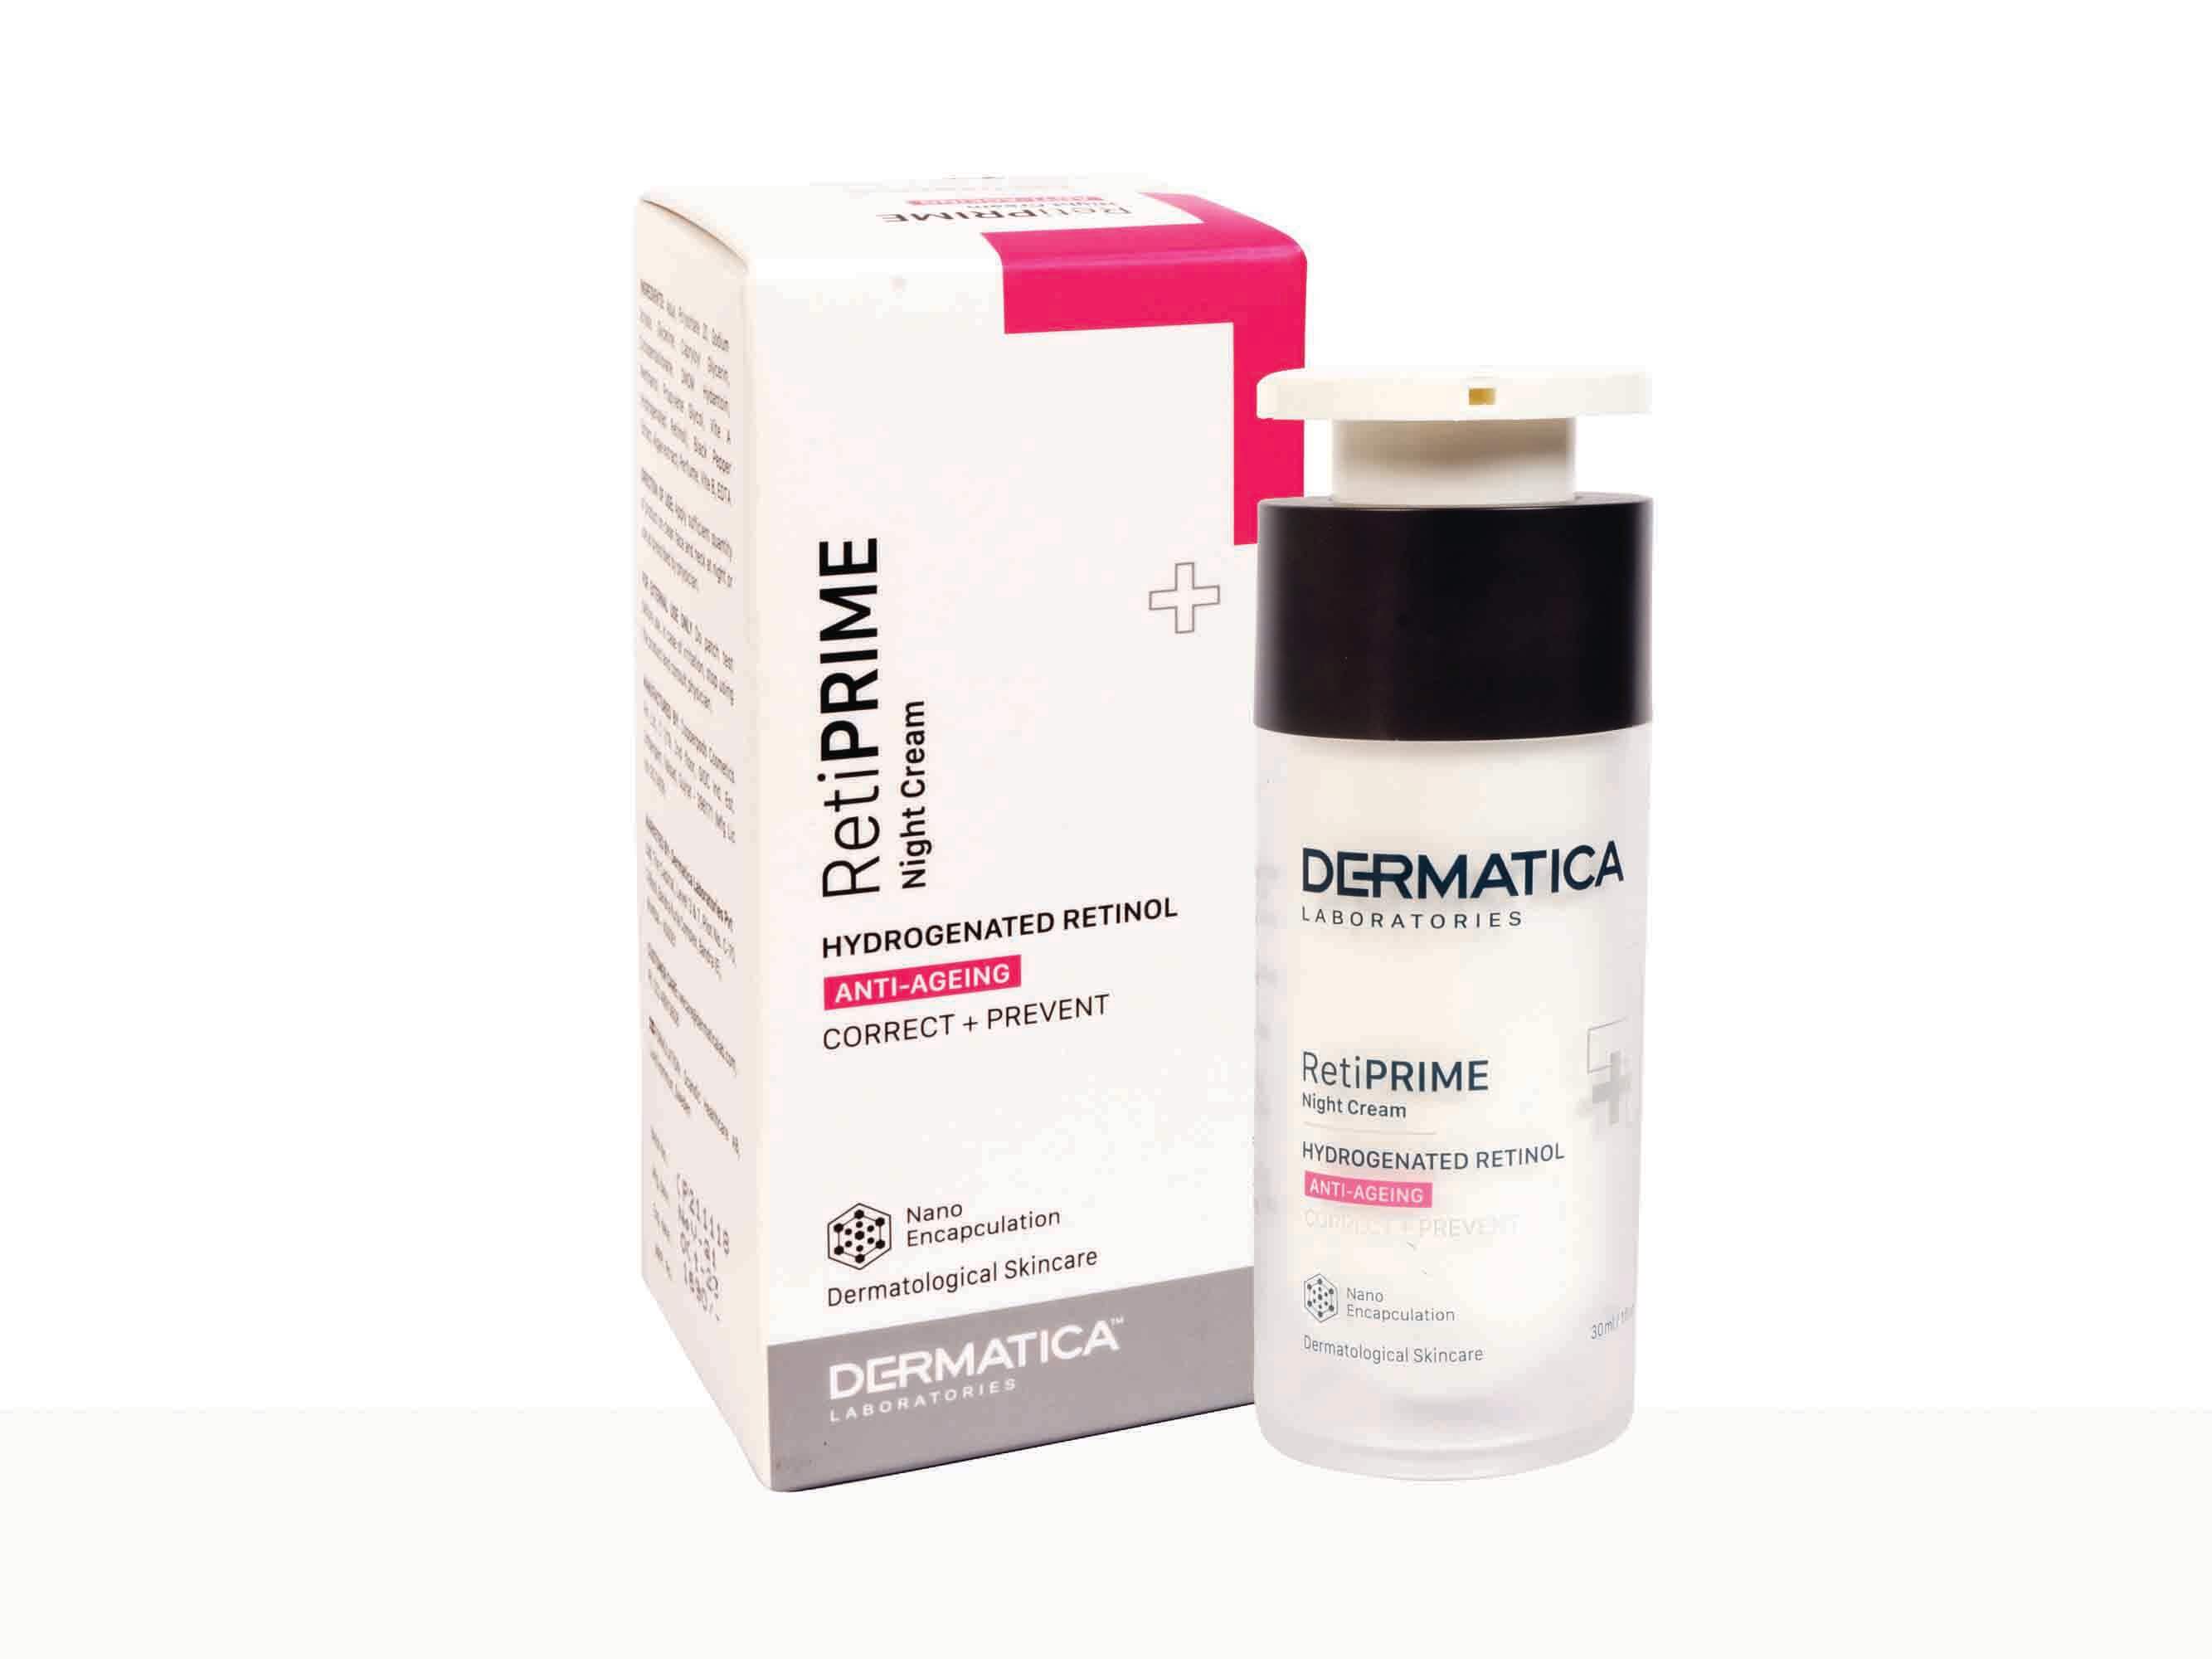 DERMATICA RetiPRIME Night Cream - Clinikally